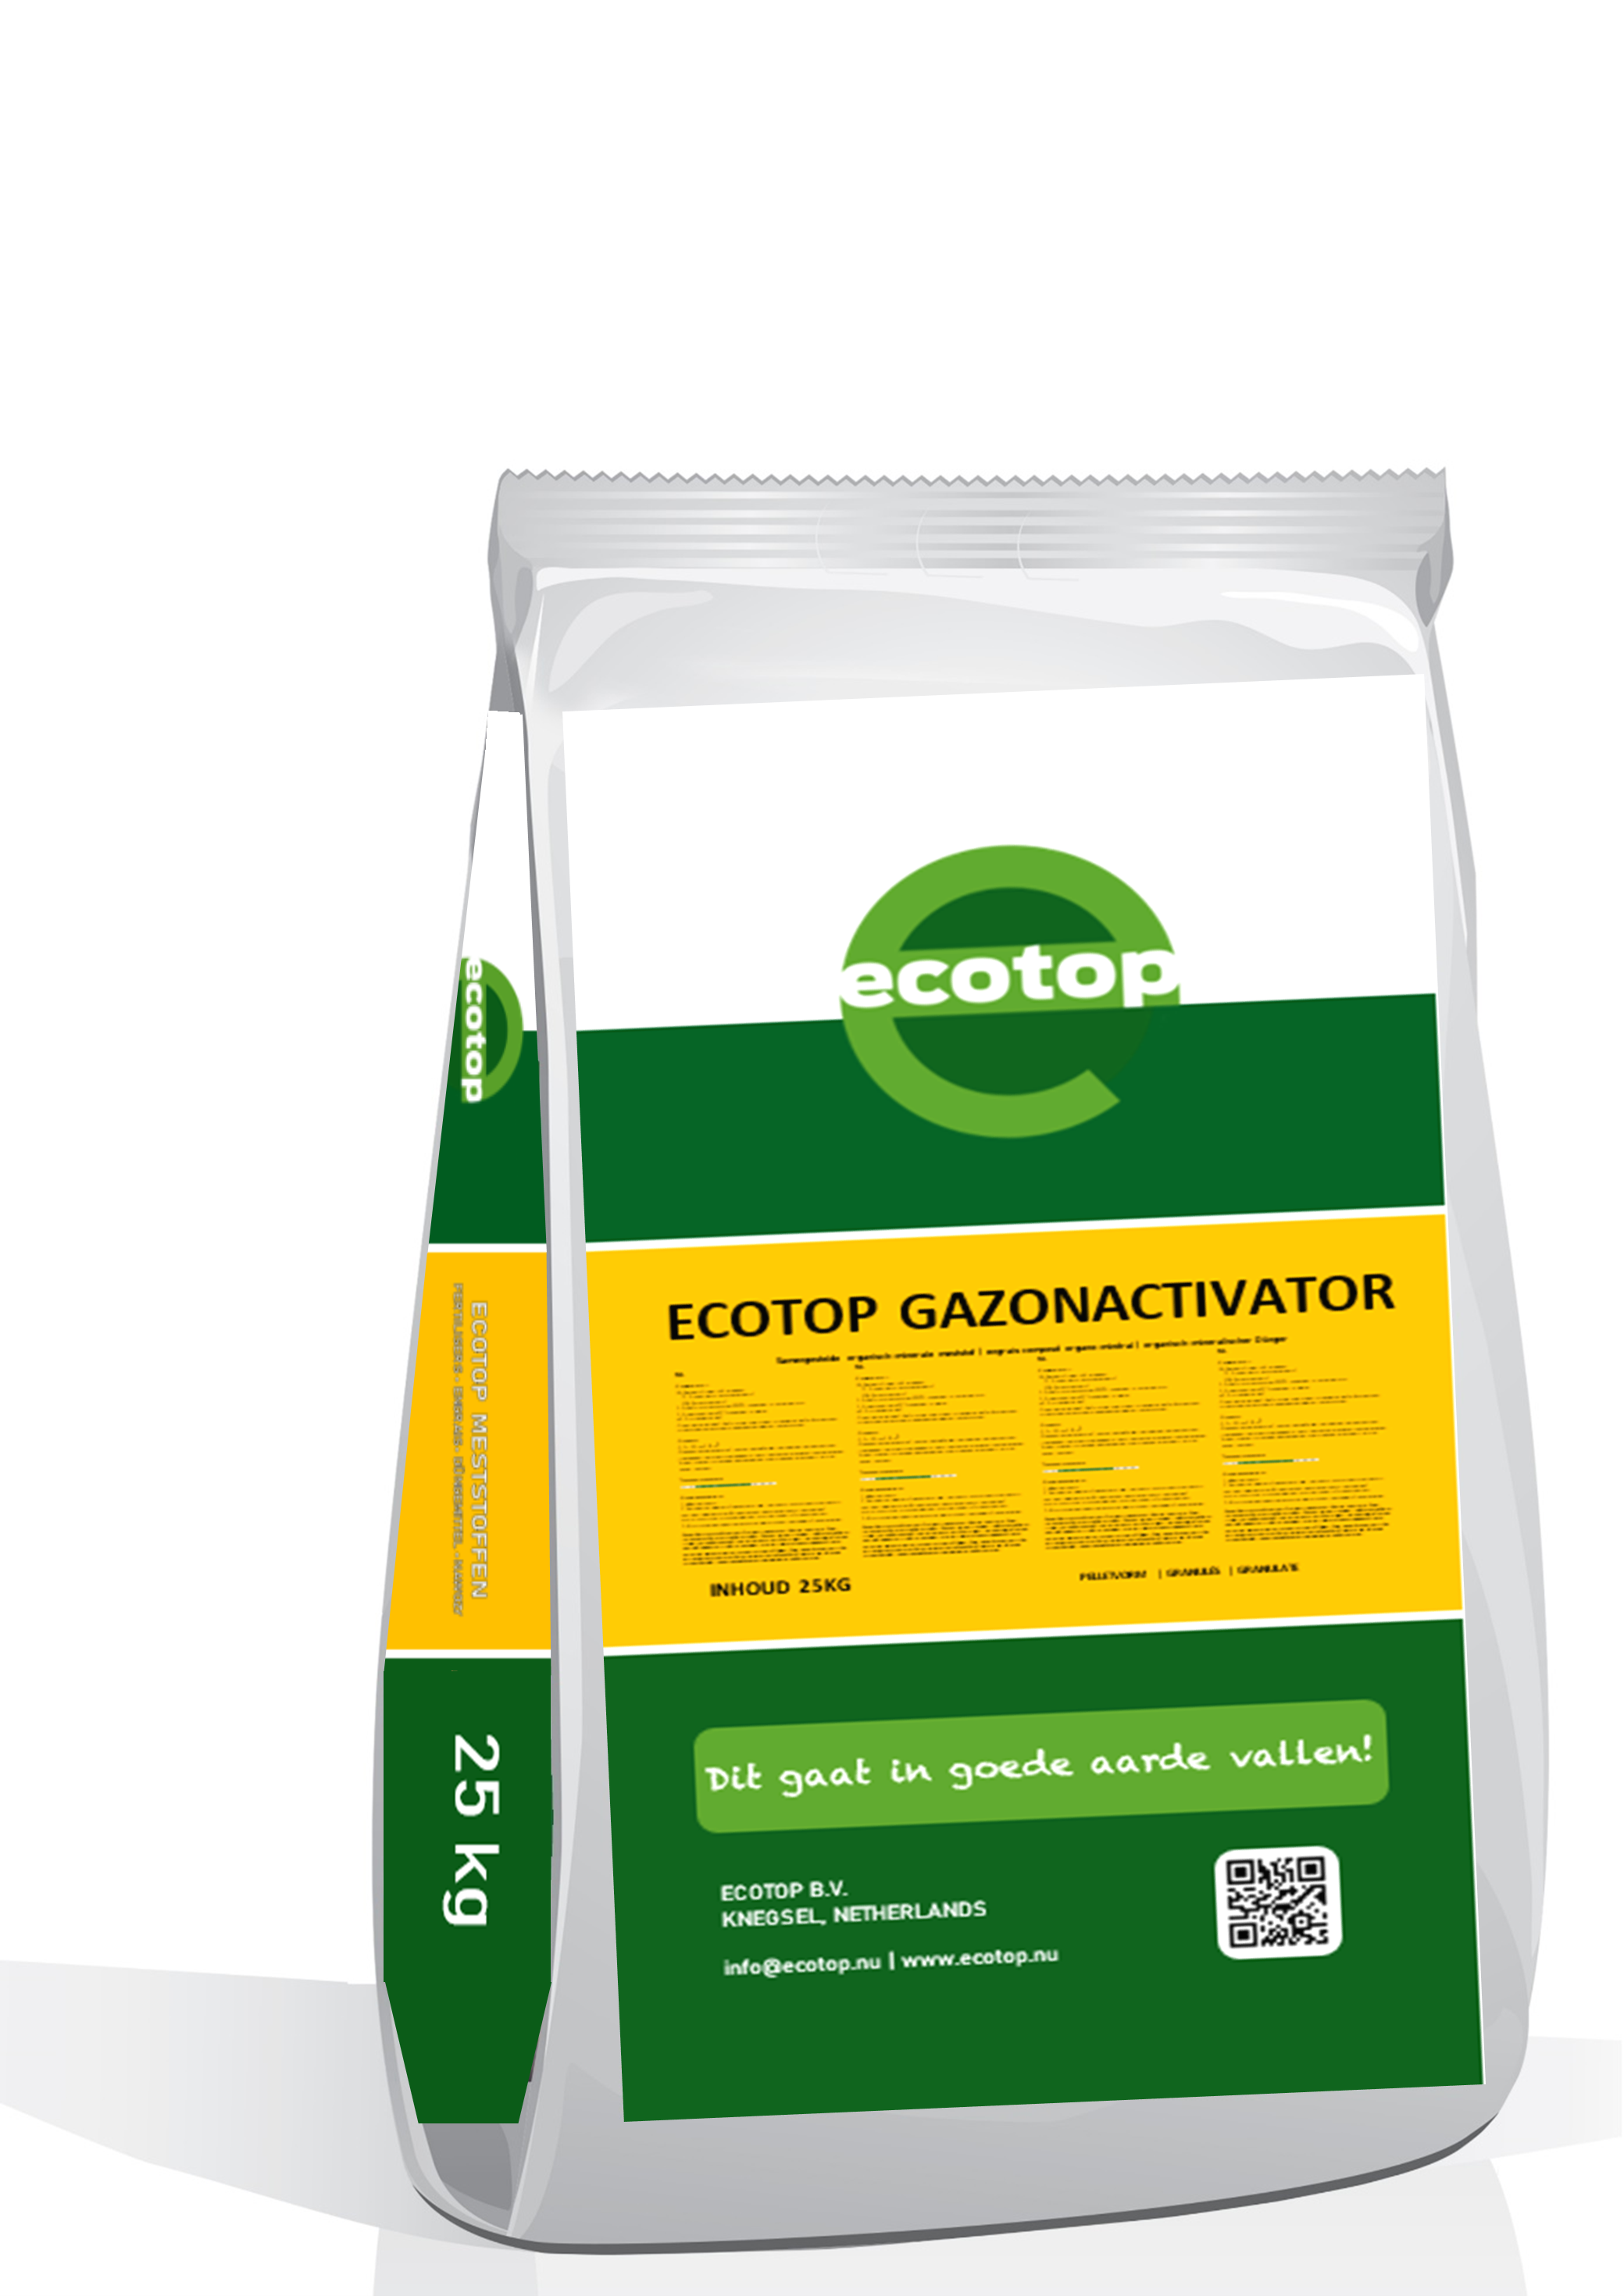 Ecotop Gazonactivator